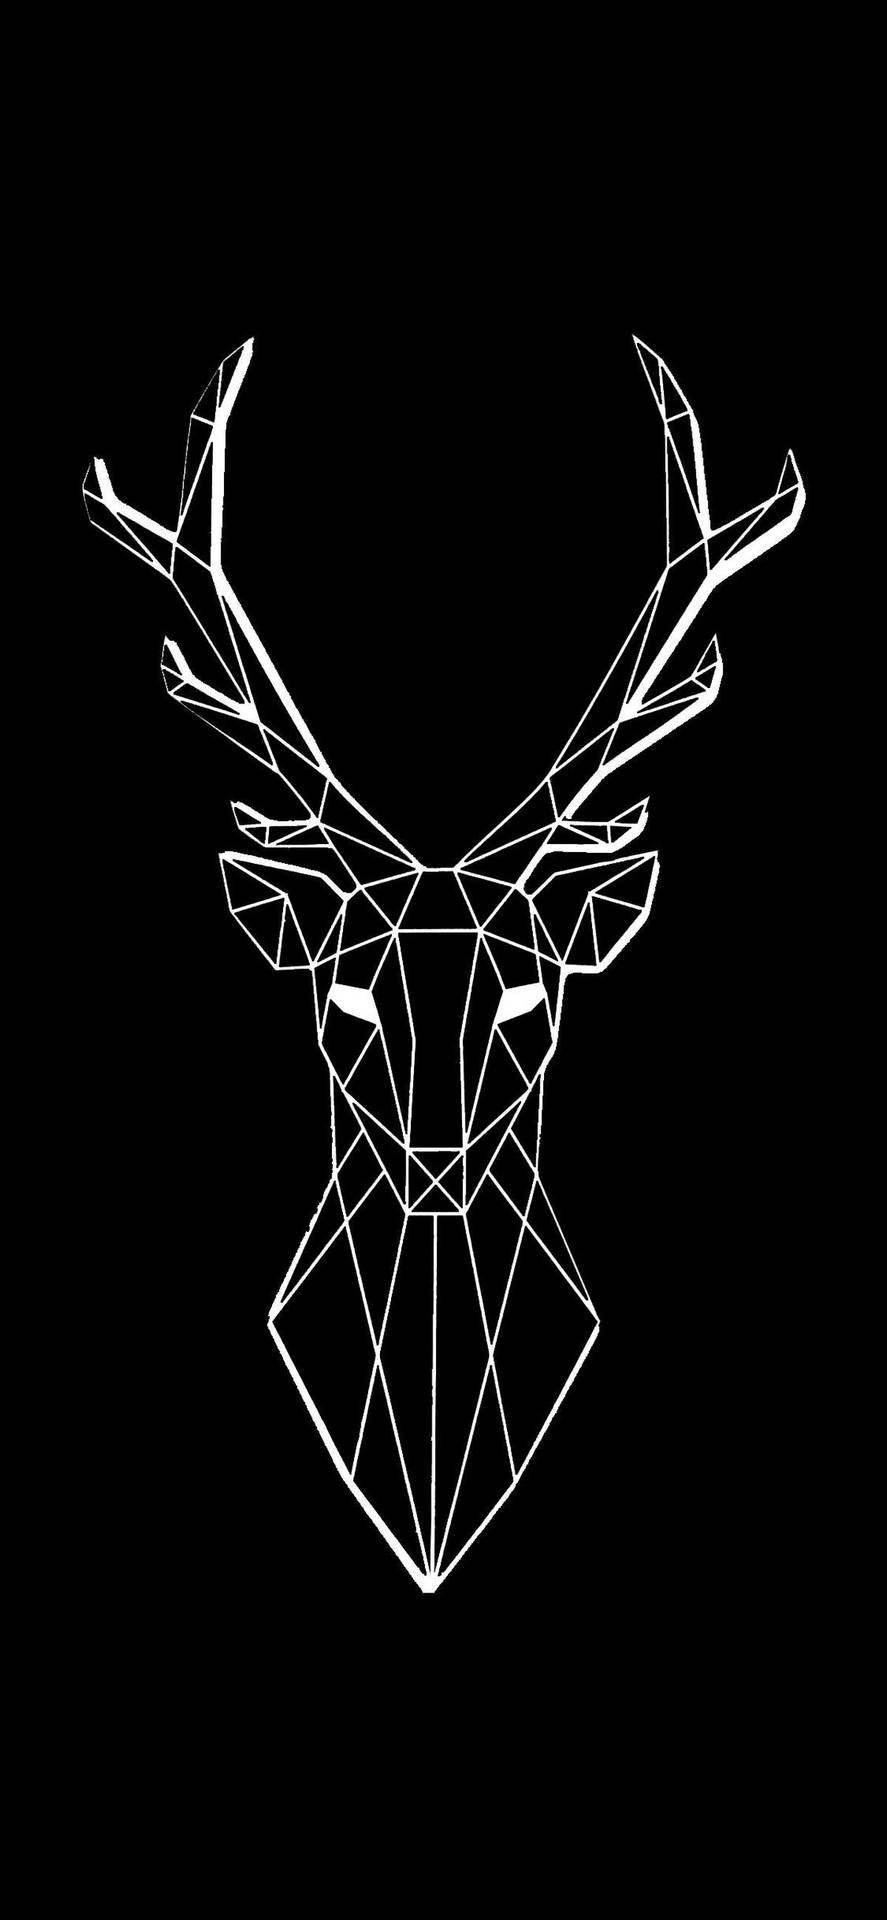 Cute Black And White Geometric Deer Wallpaper